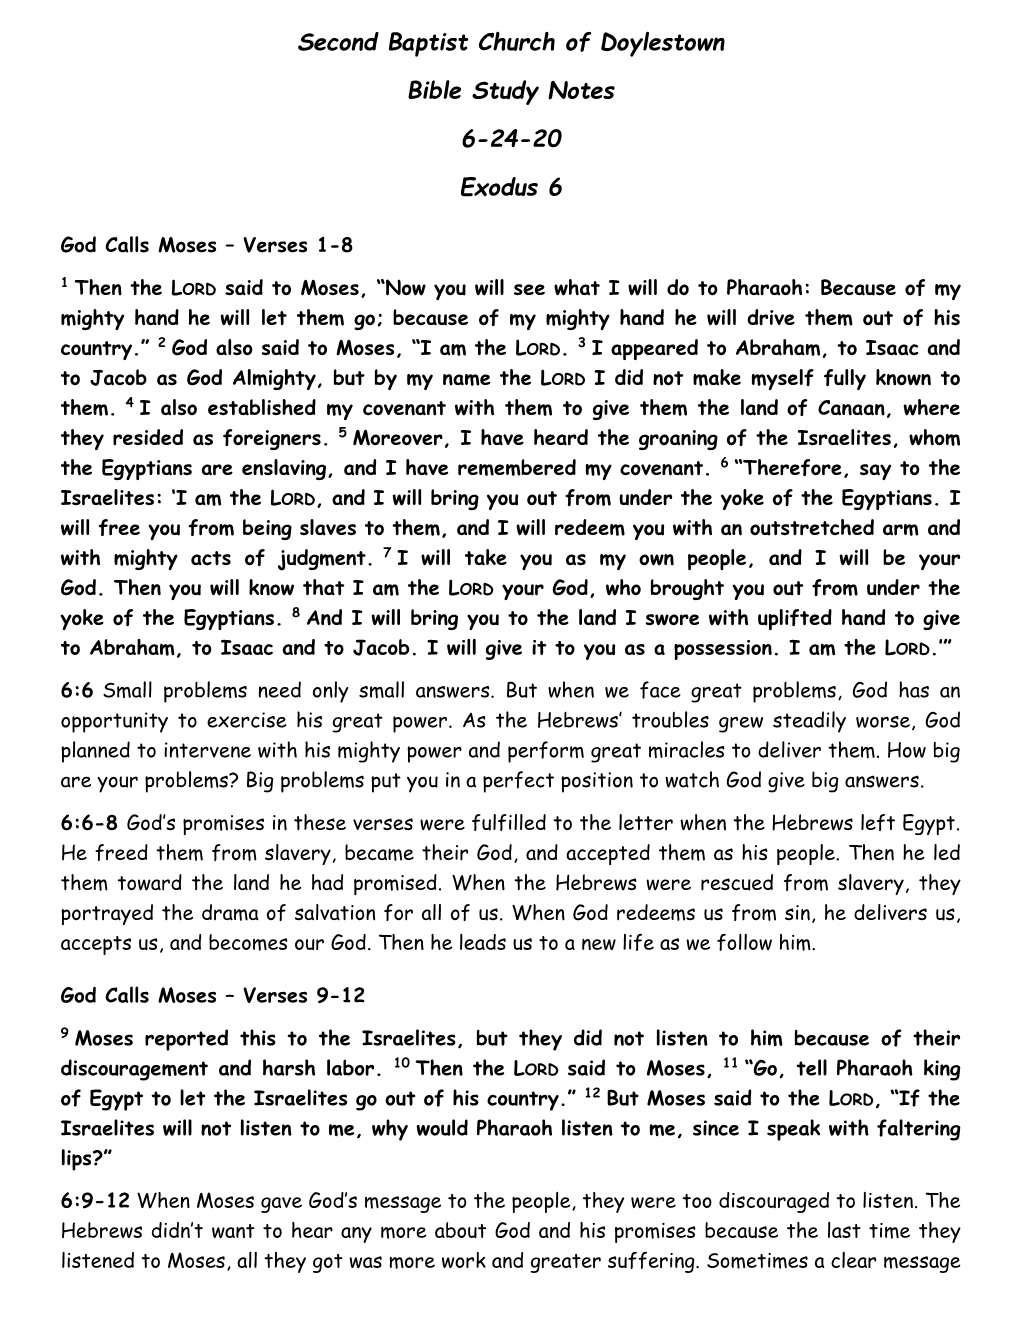 Second Baptist Church of Doylestown Bible Study Notes 6-24-20 Exodus 6